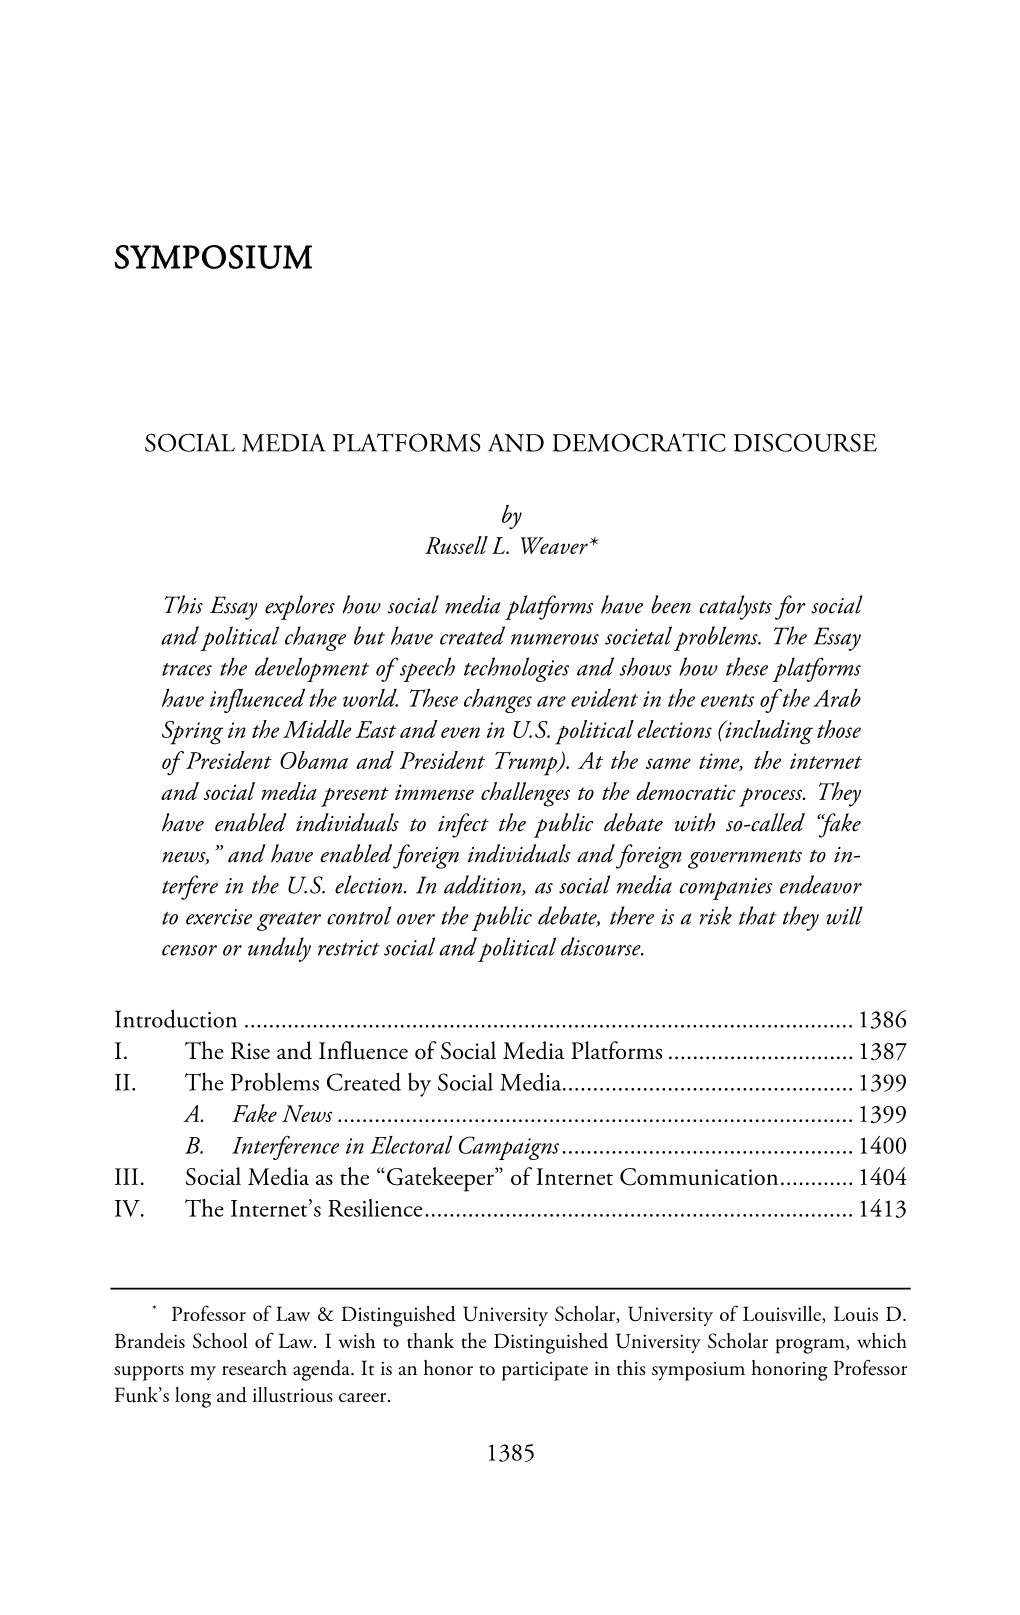 Social Media Platforms and Democratic Discourse